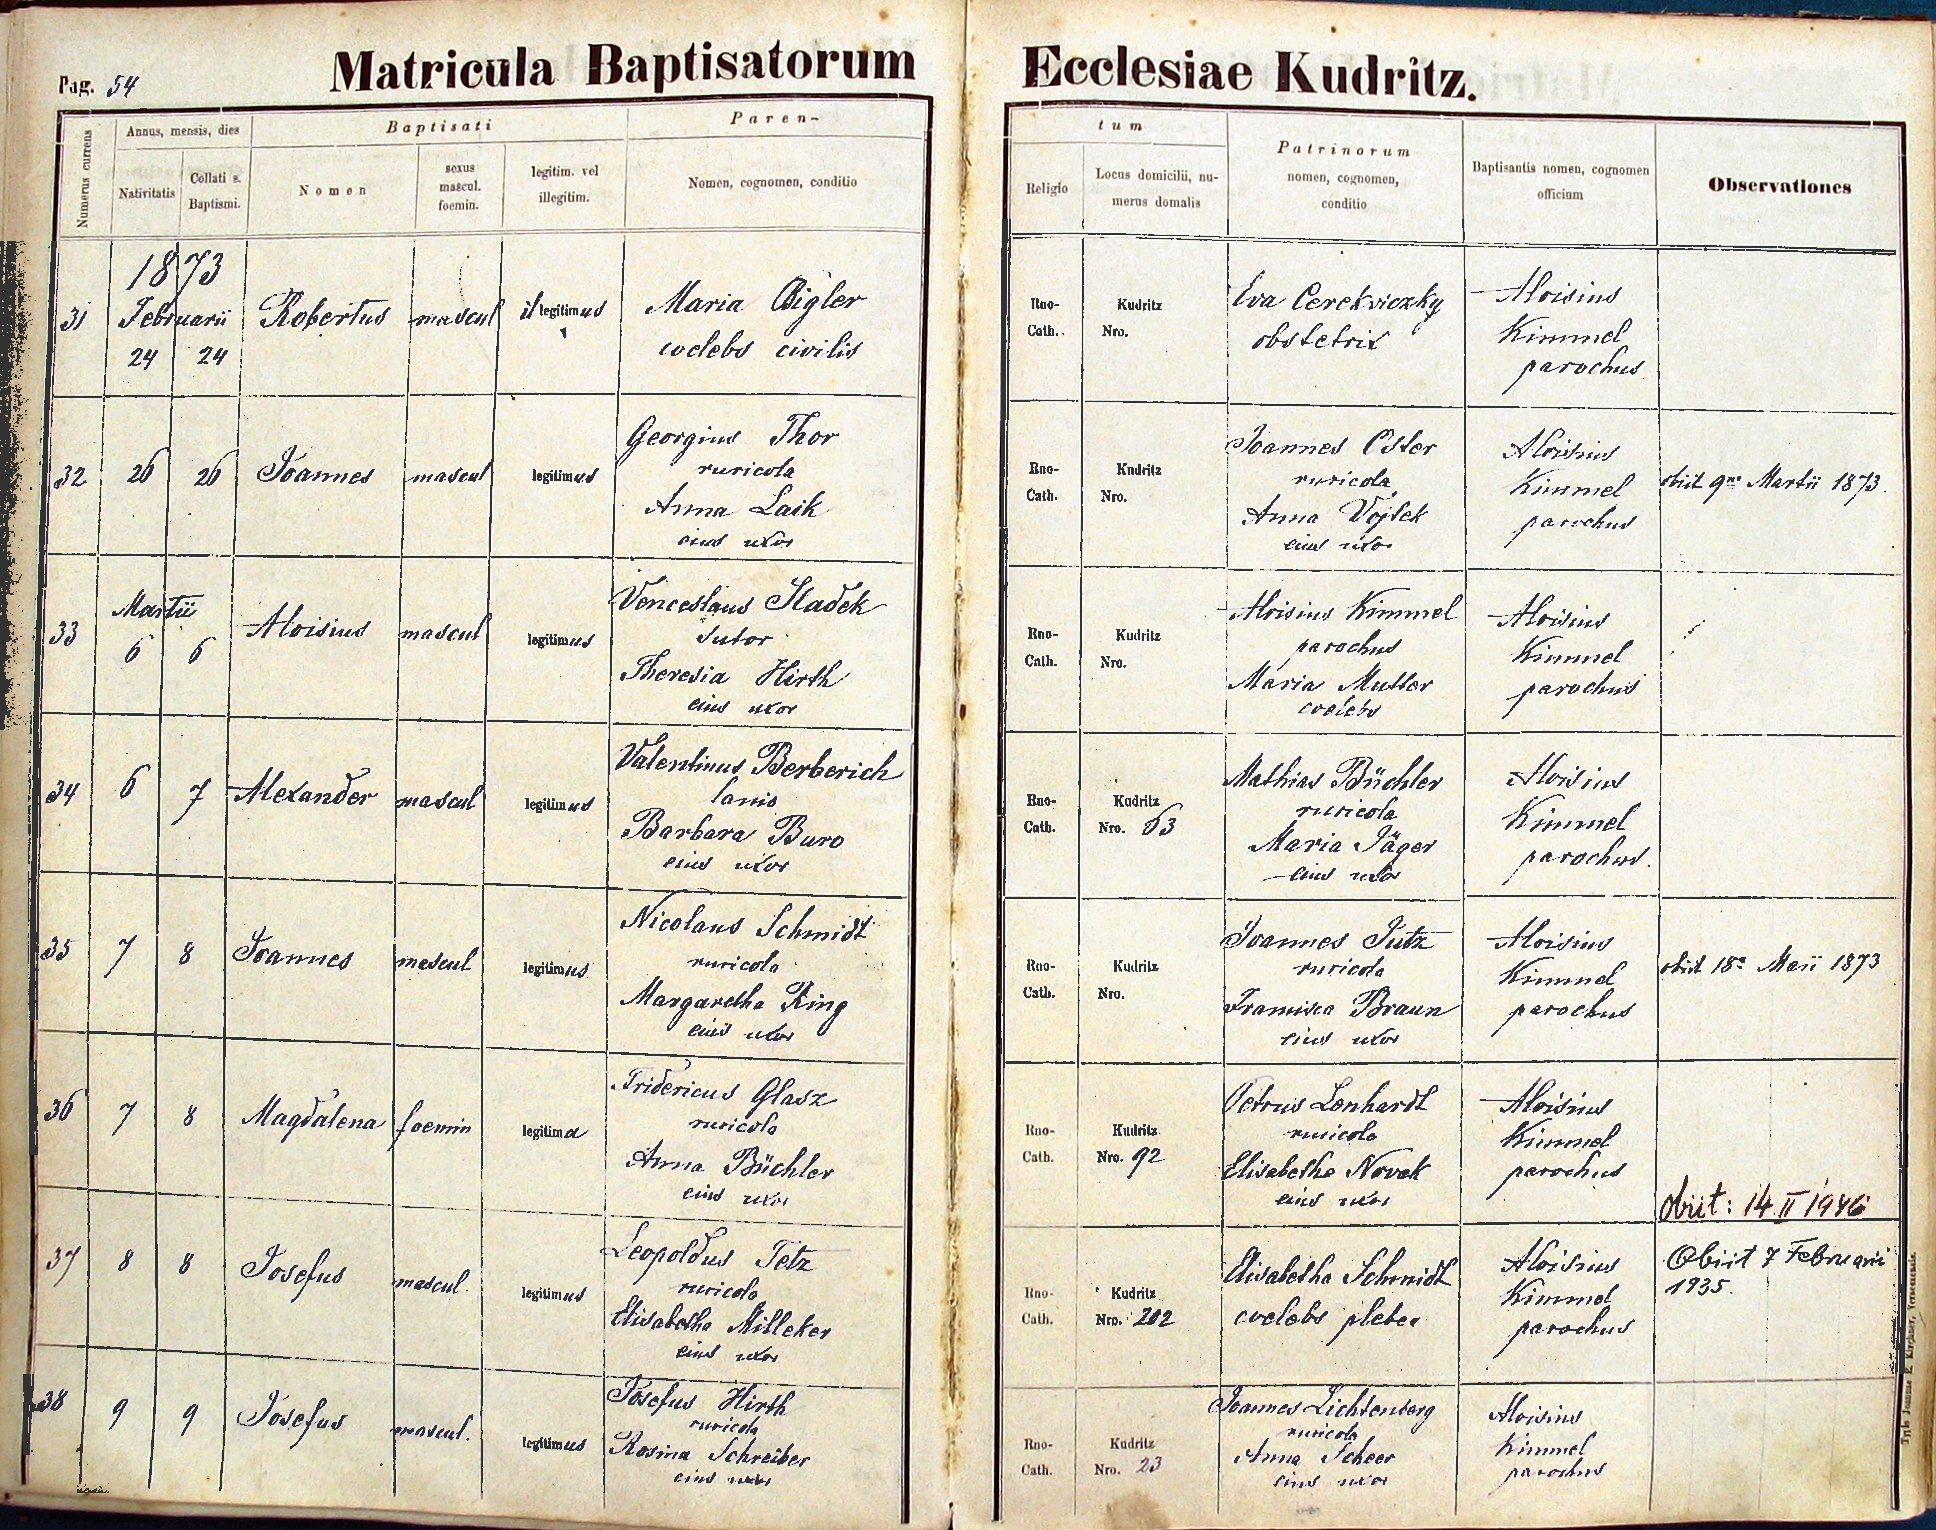 images/church_records/BIRTHS/1884-1899B/1887/054